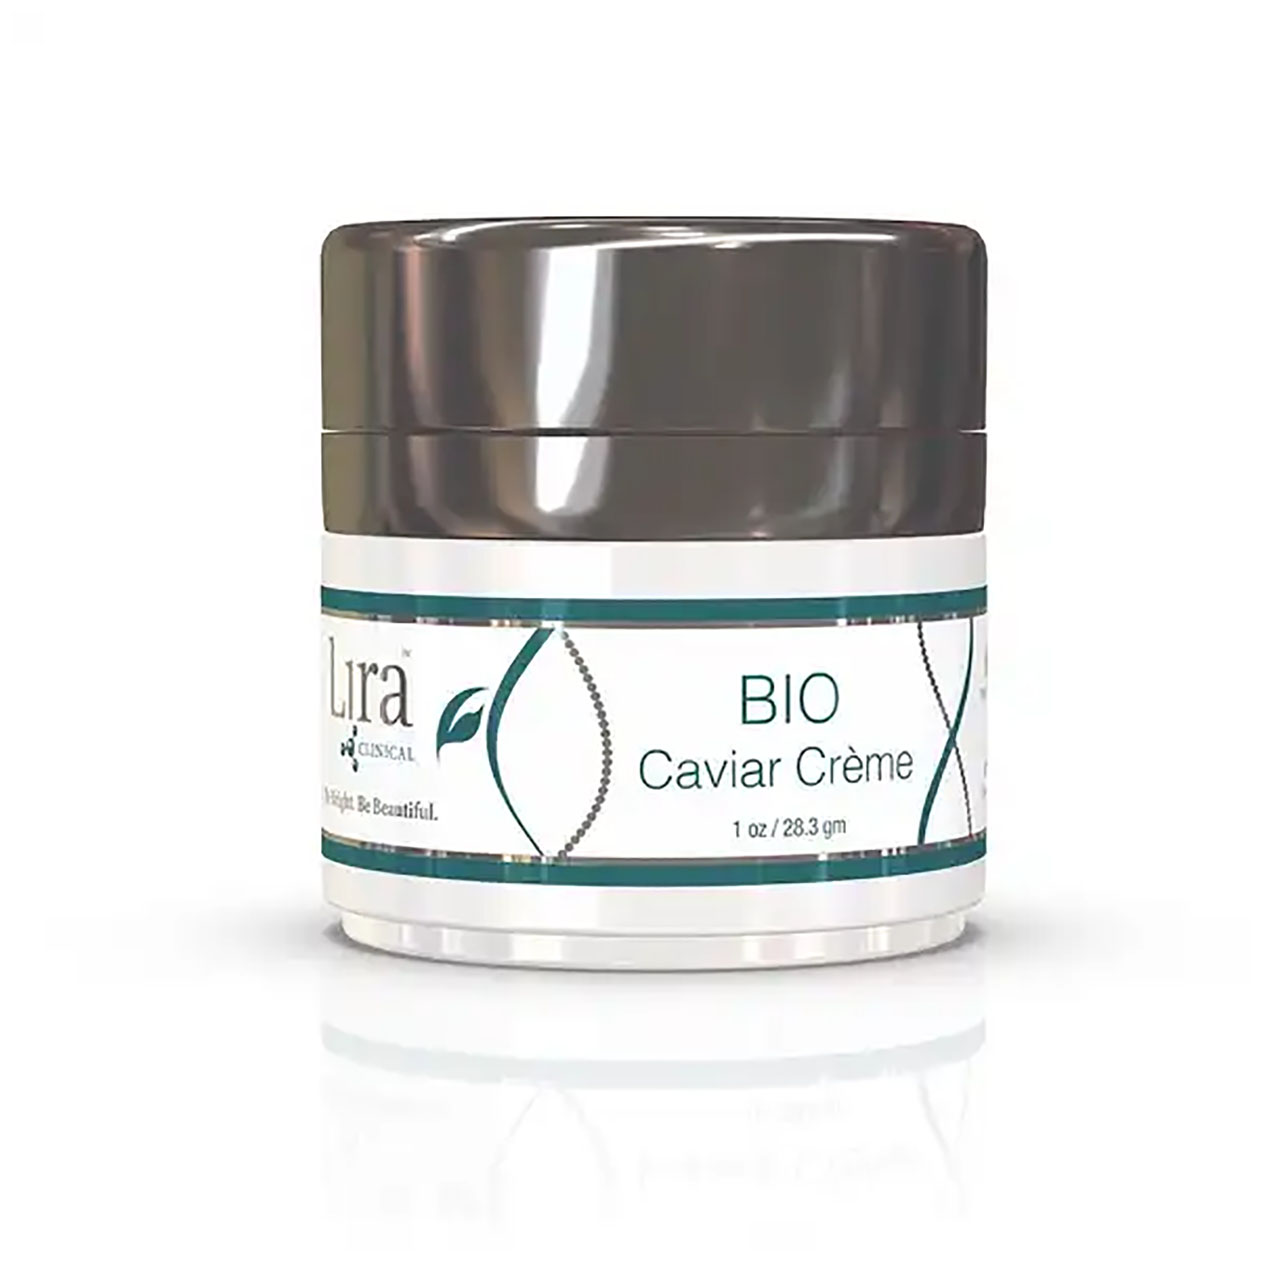 Lira Clinical BIO Caviar Creme with PSC - 1 oz Questions & Answers